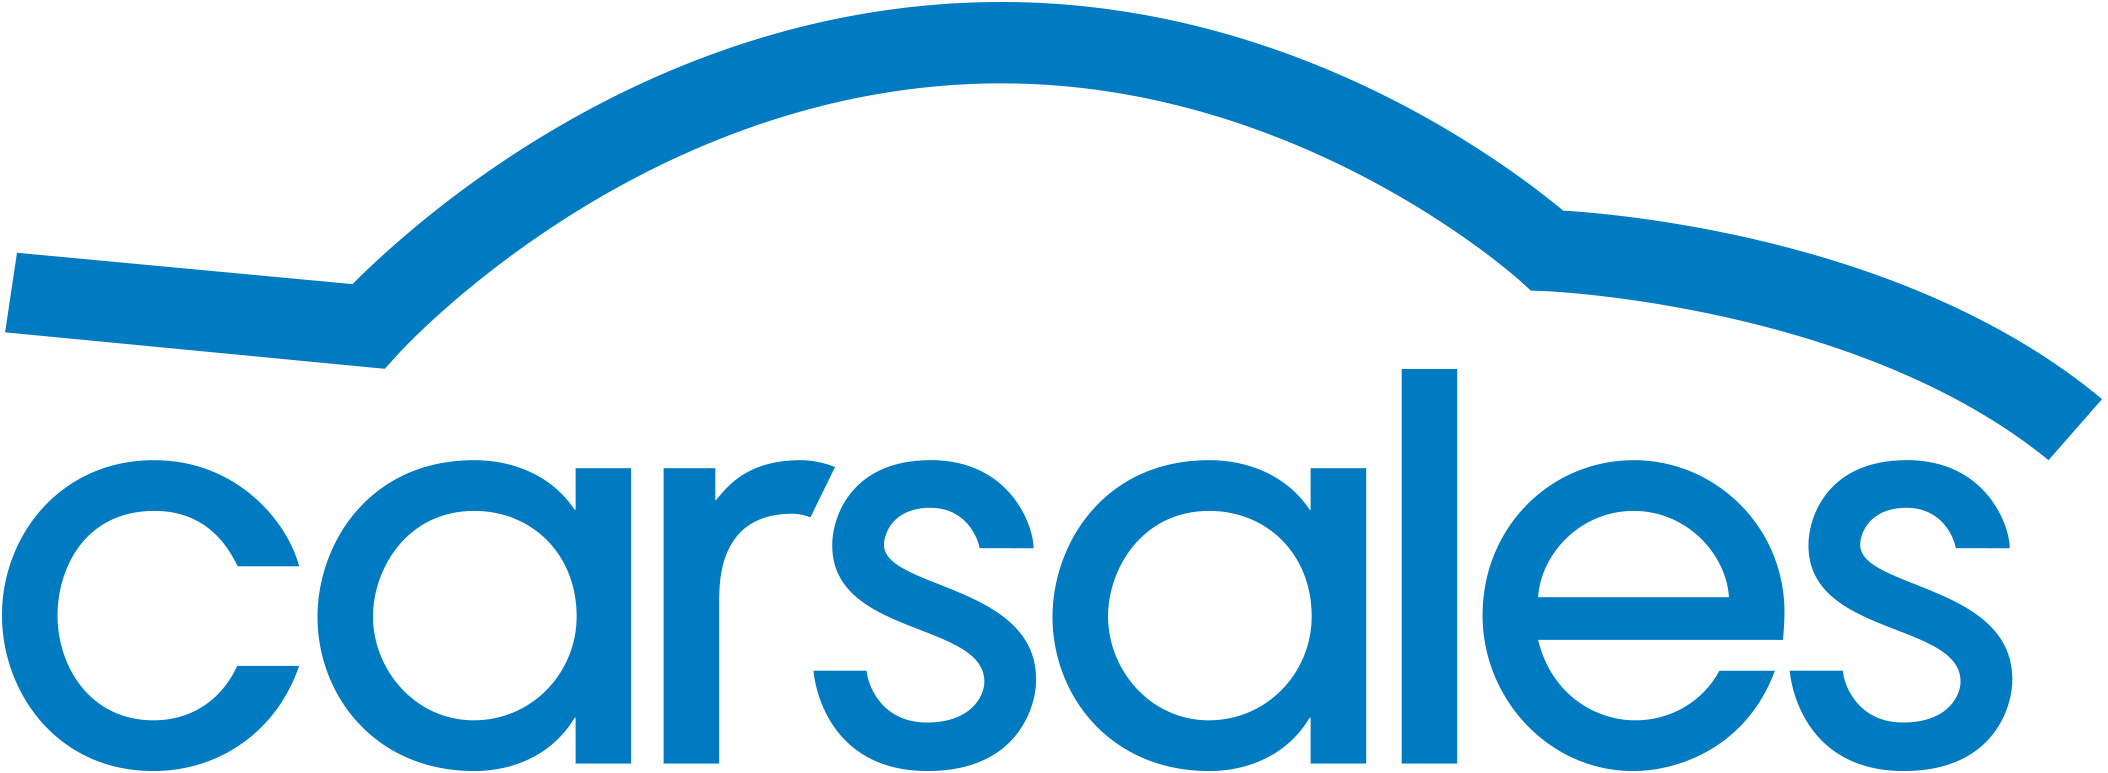 Carsales.com (CAR) logo